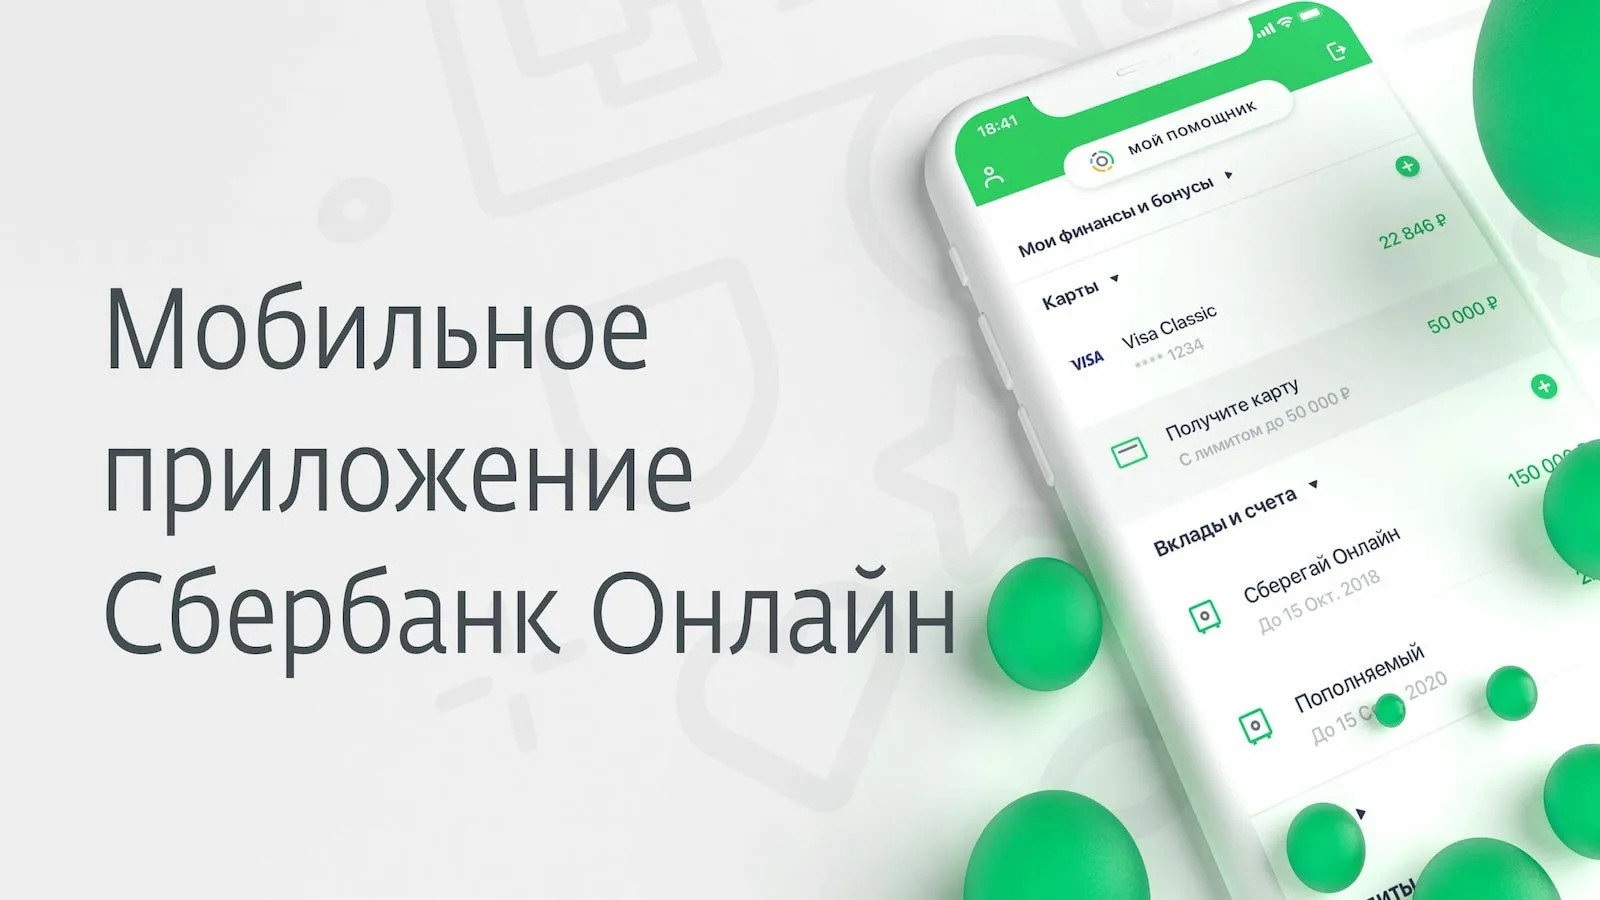 Sberbank mobile